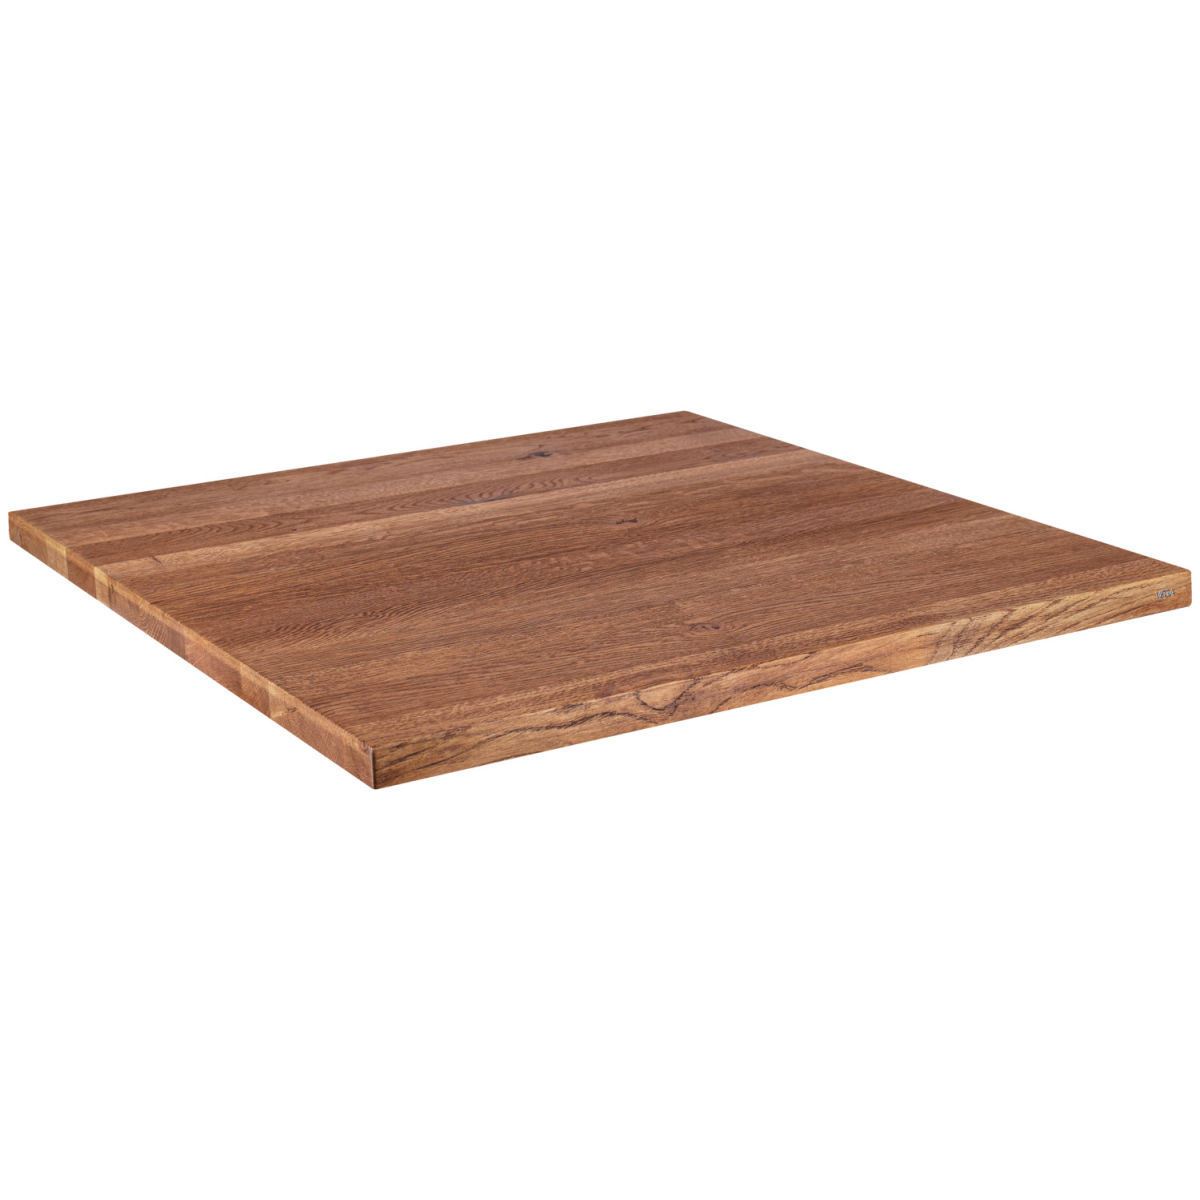 Vega Massief houten tafelblad Torres vierkant; 60x60x3 cm (LxBxH); antiek eiken/bruin; vierkant